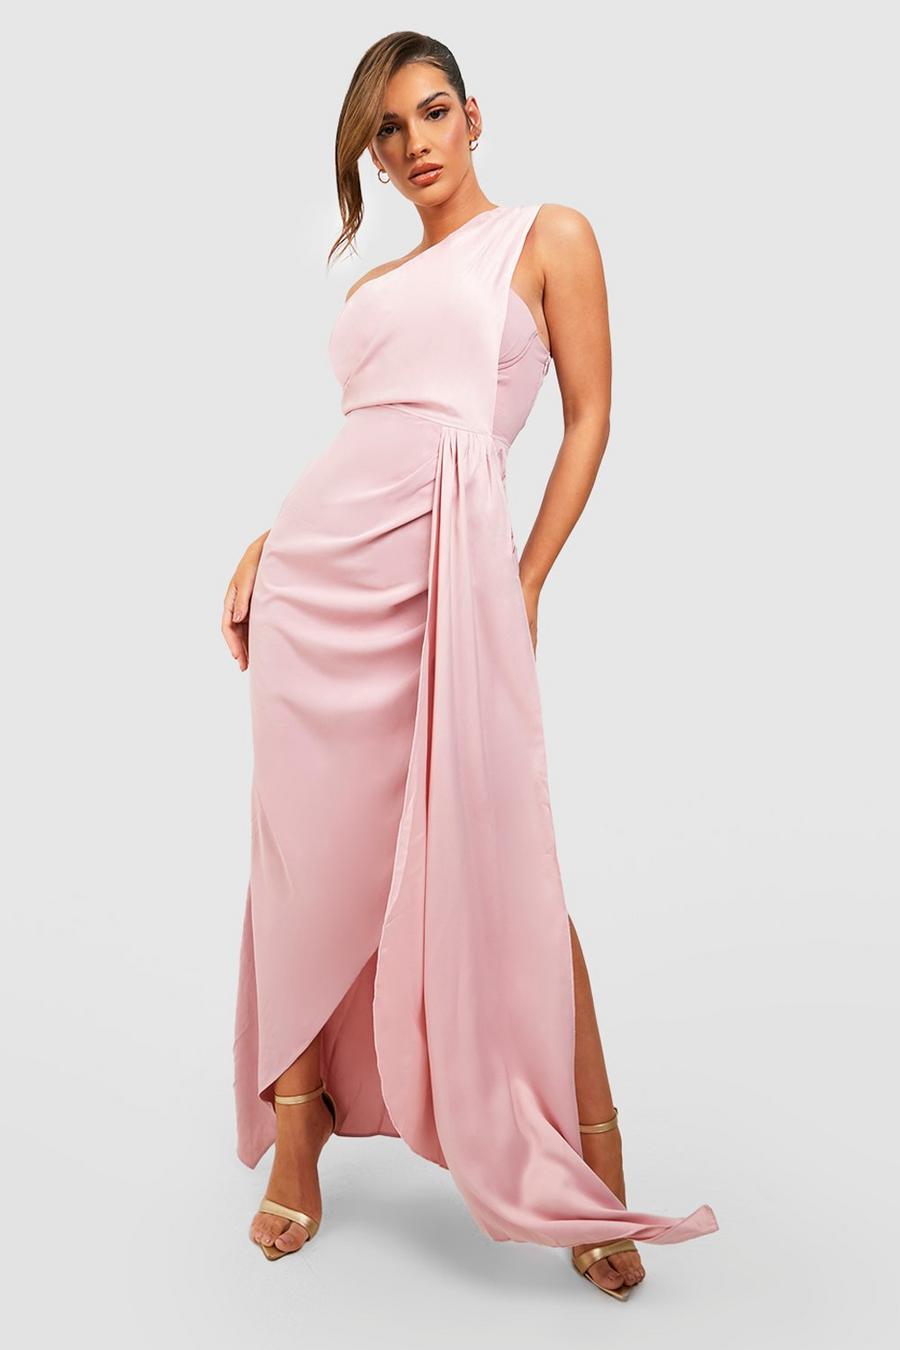 Blush pink Satin Drape One Shoulder Maxi Dress